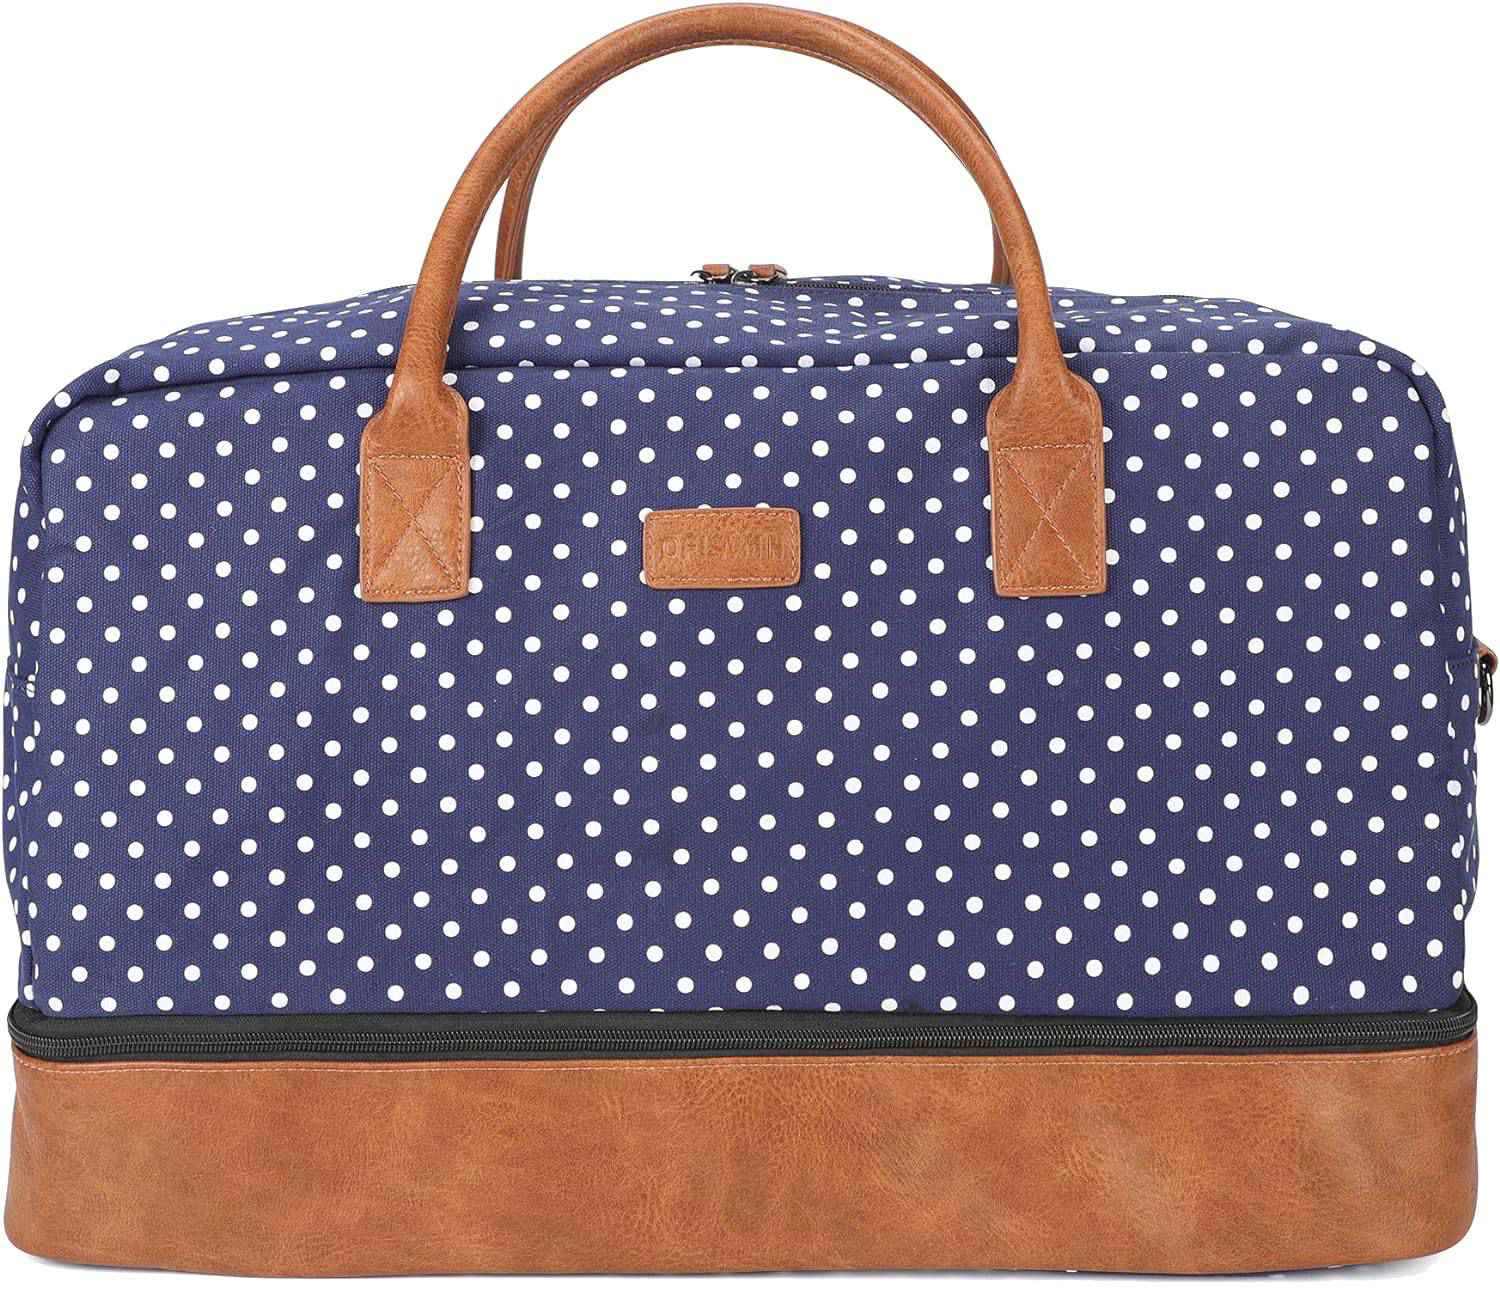 Oflamn Weekender Travel Bag for Women